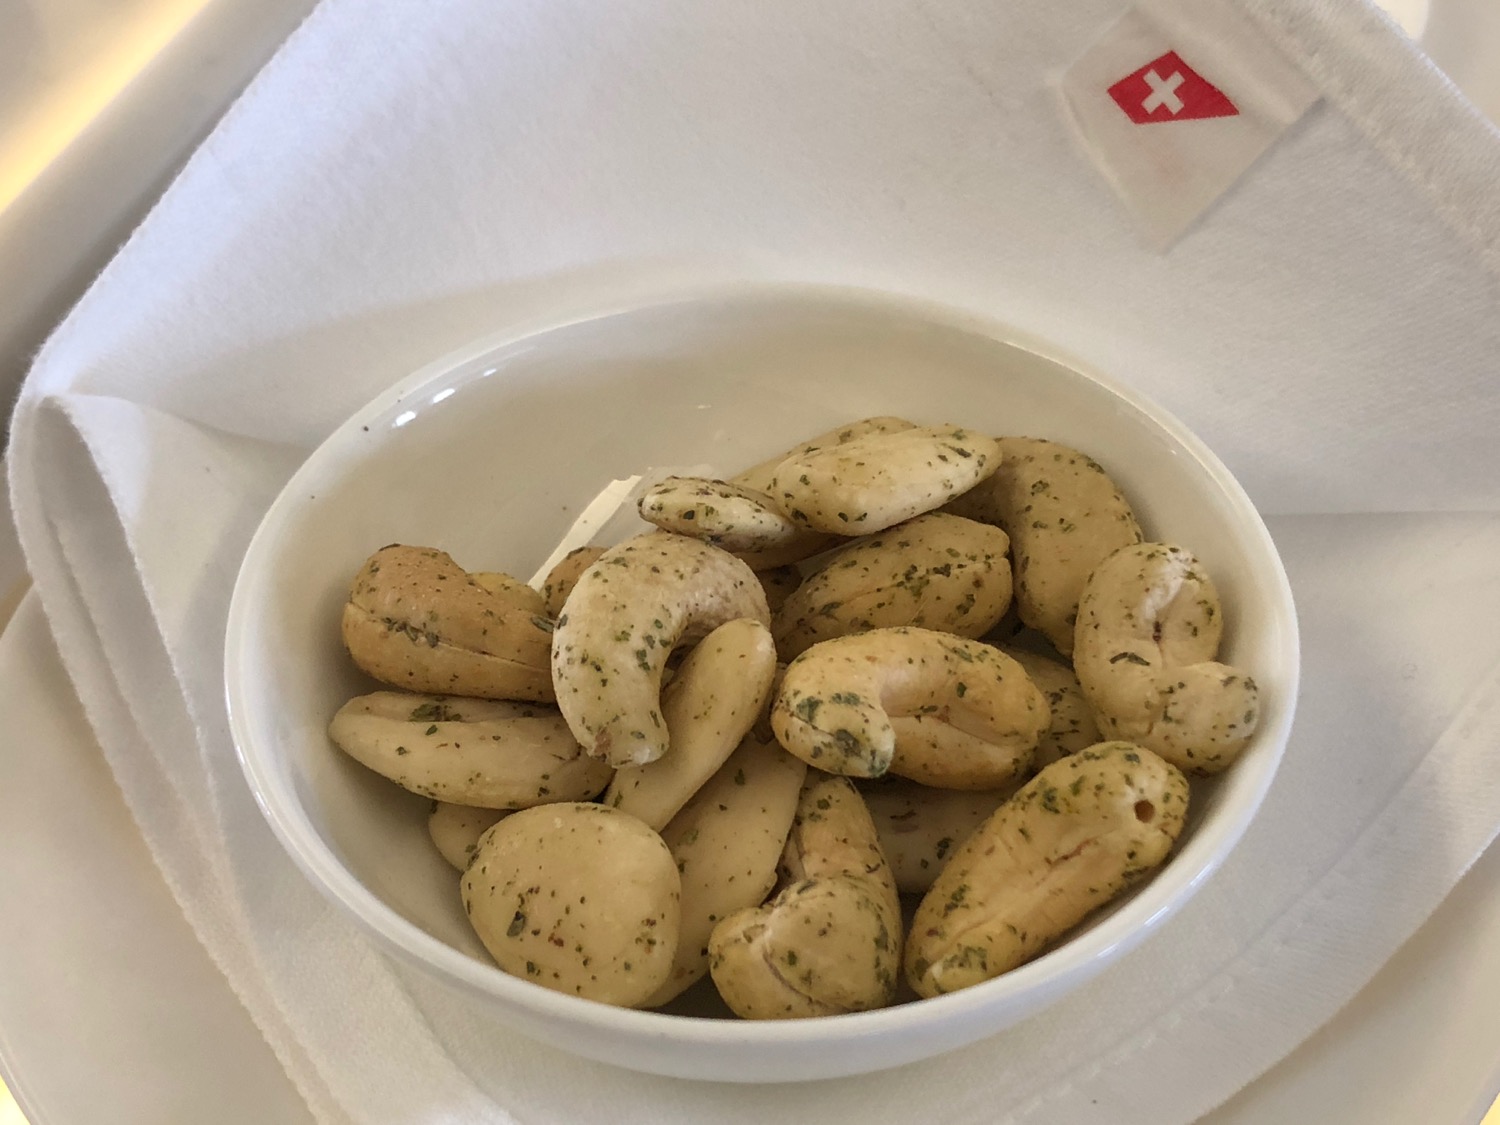 a bowl of cashews on a napkin